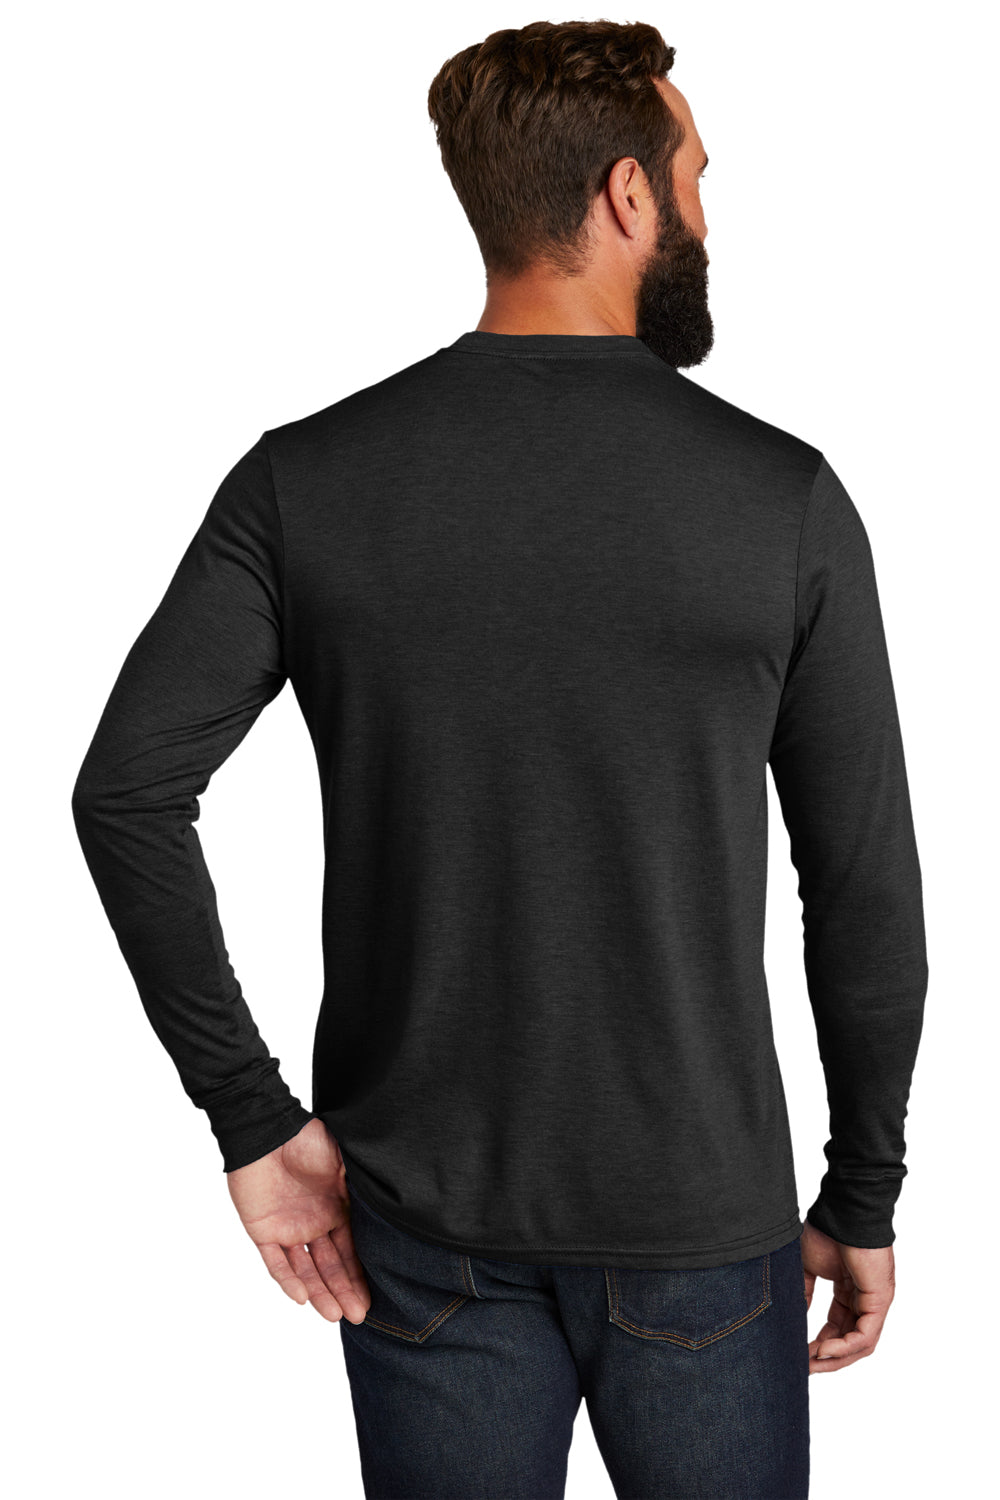 Allmade AL6004 Mens Long Sleeve Crewneck T-Shirt Space Black Model Back